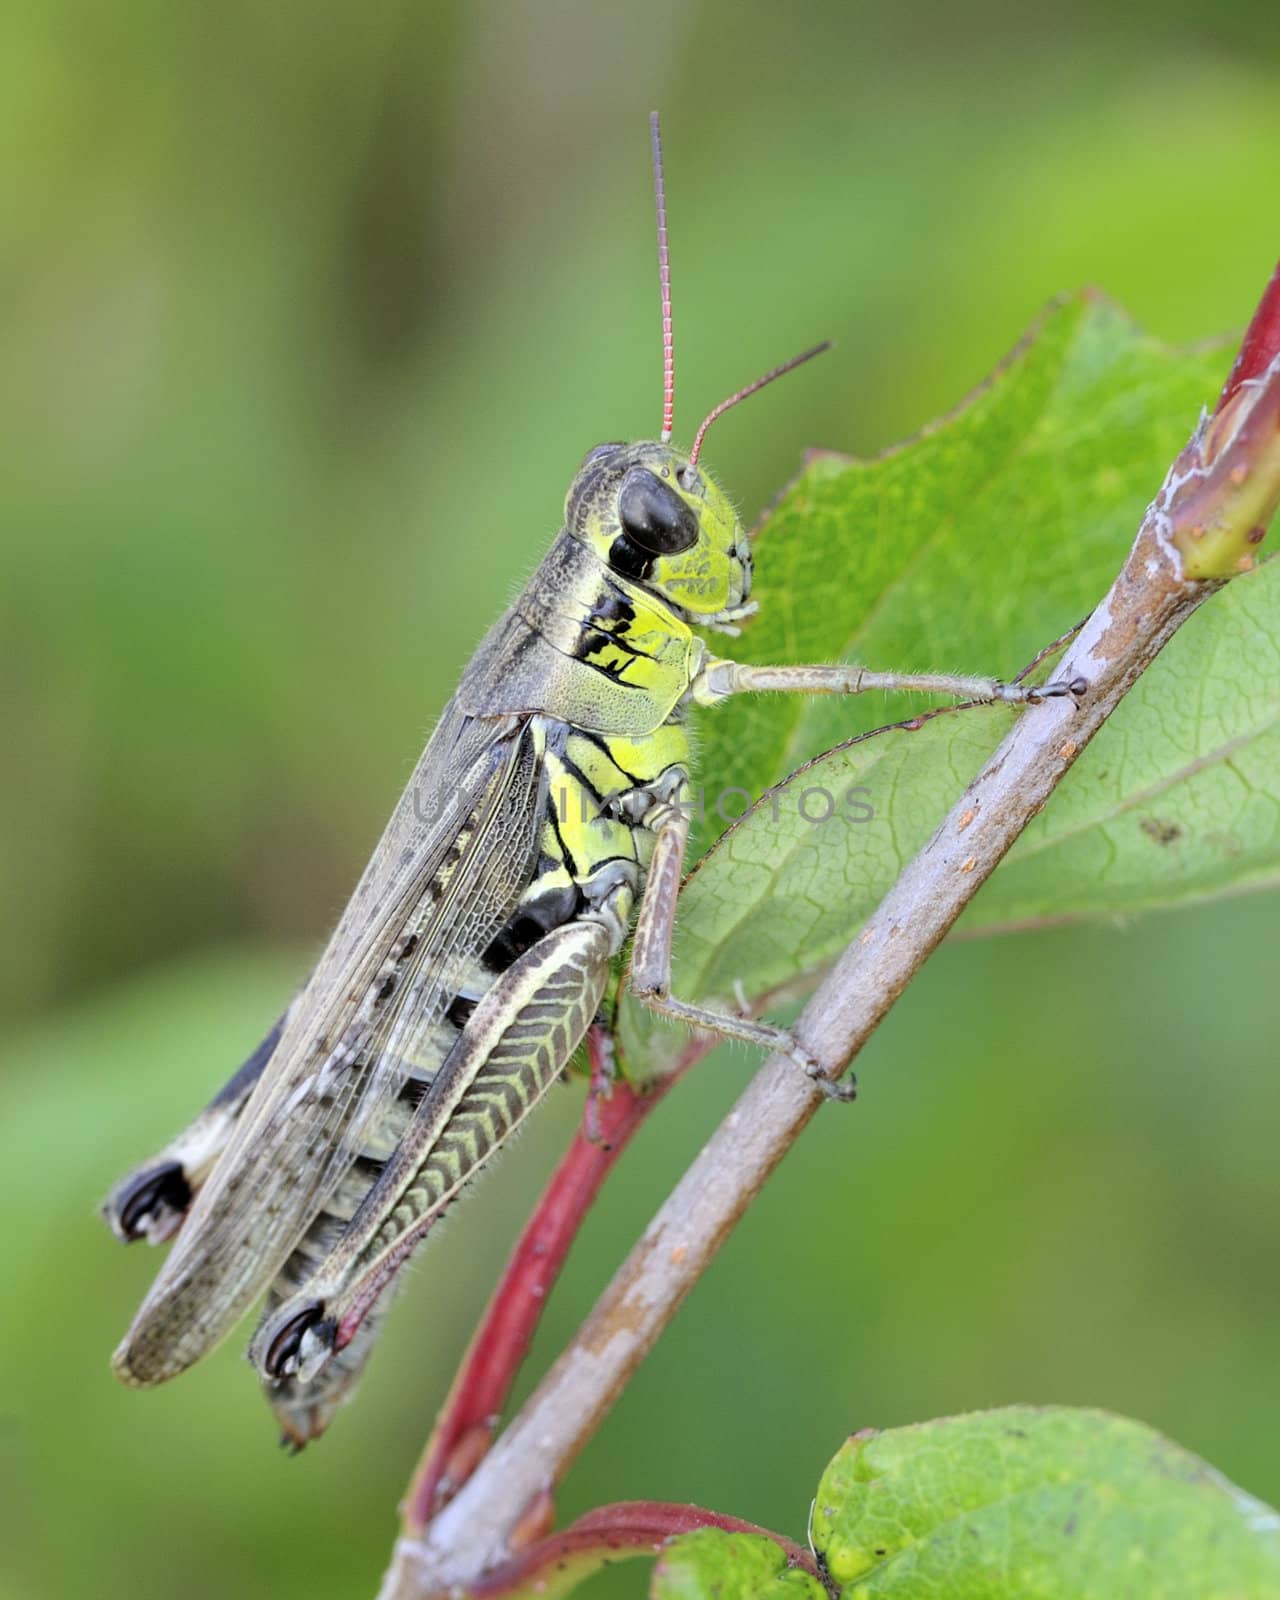 A grasshopper perched on a plant stem.